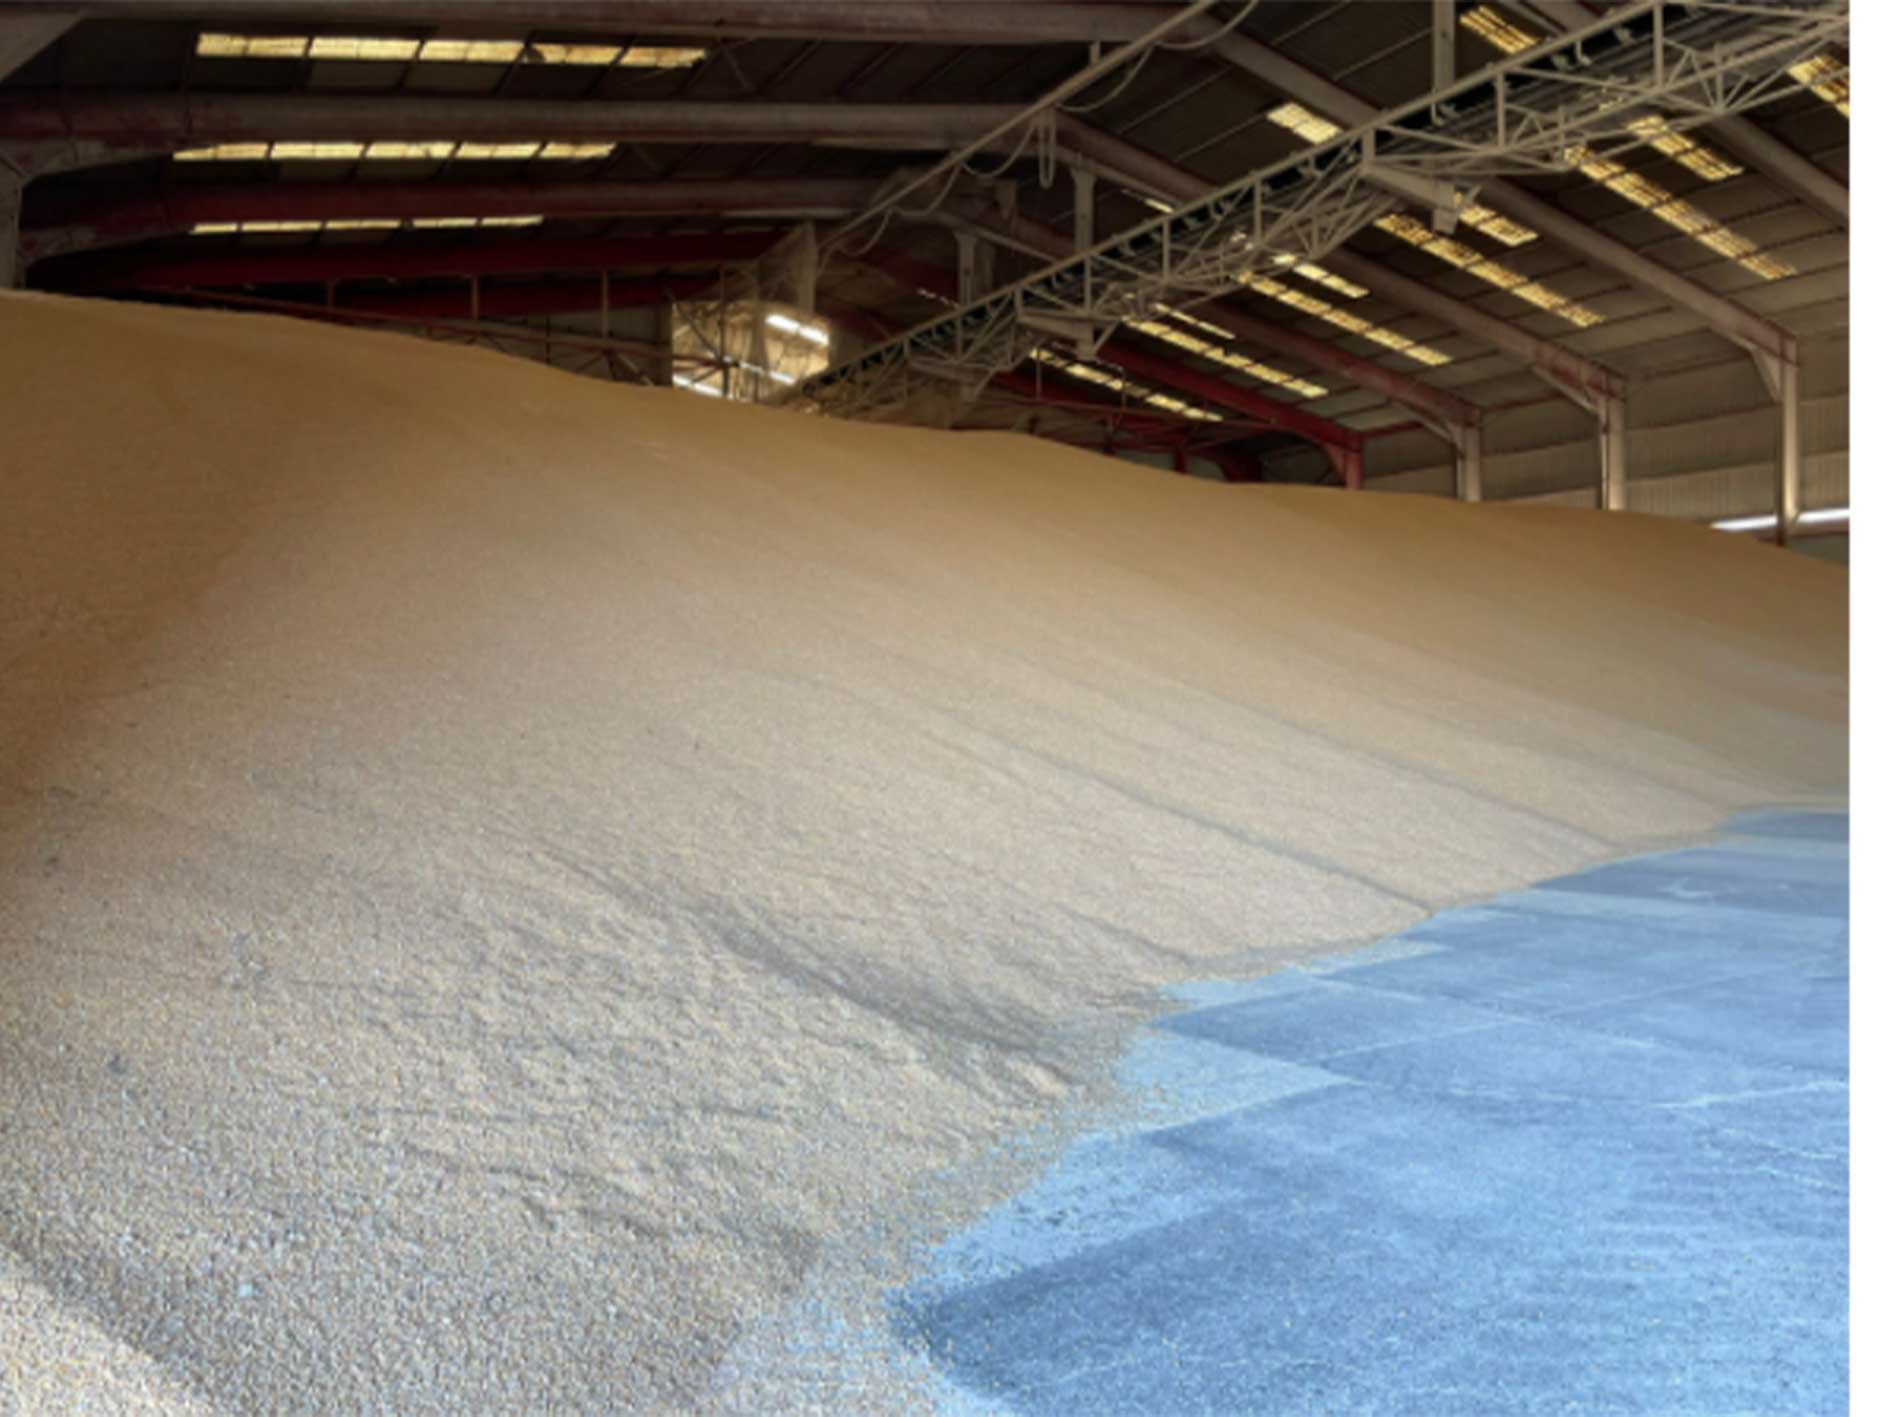 Ukraine unloads first corn shipment on foreign soil